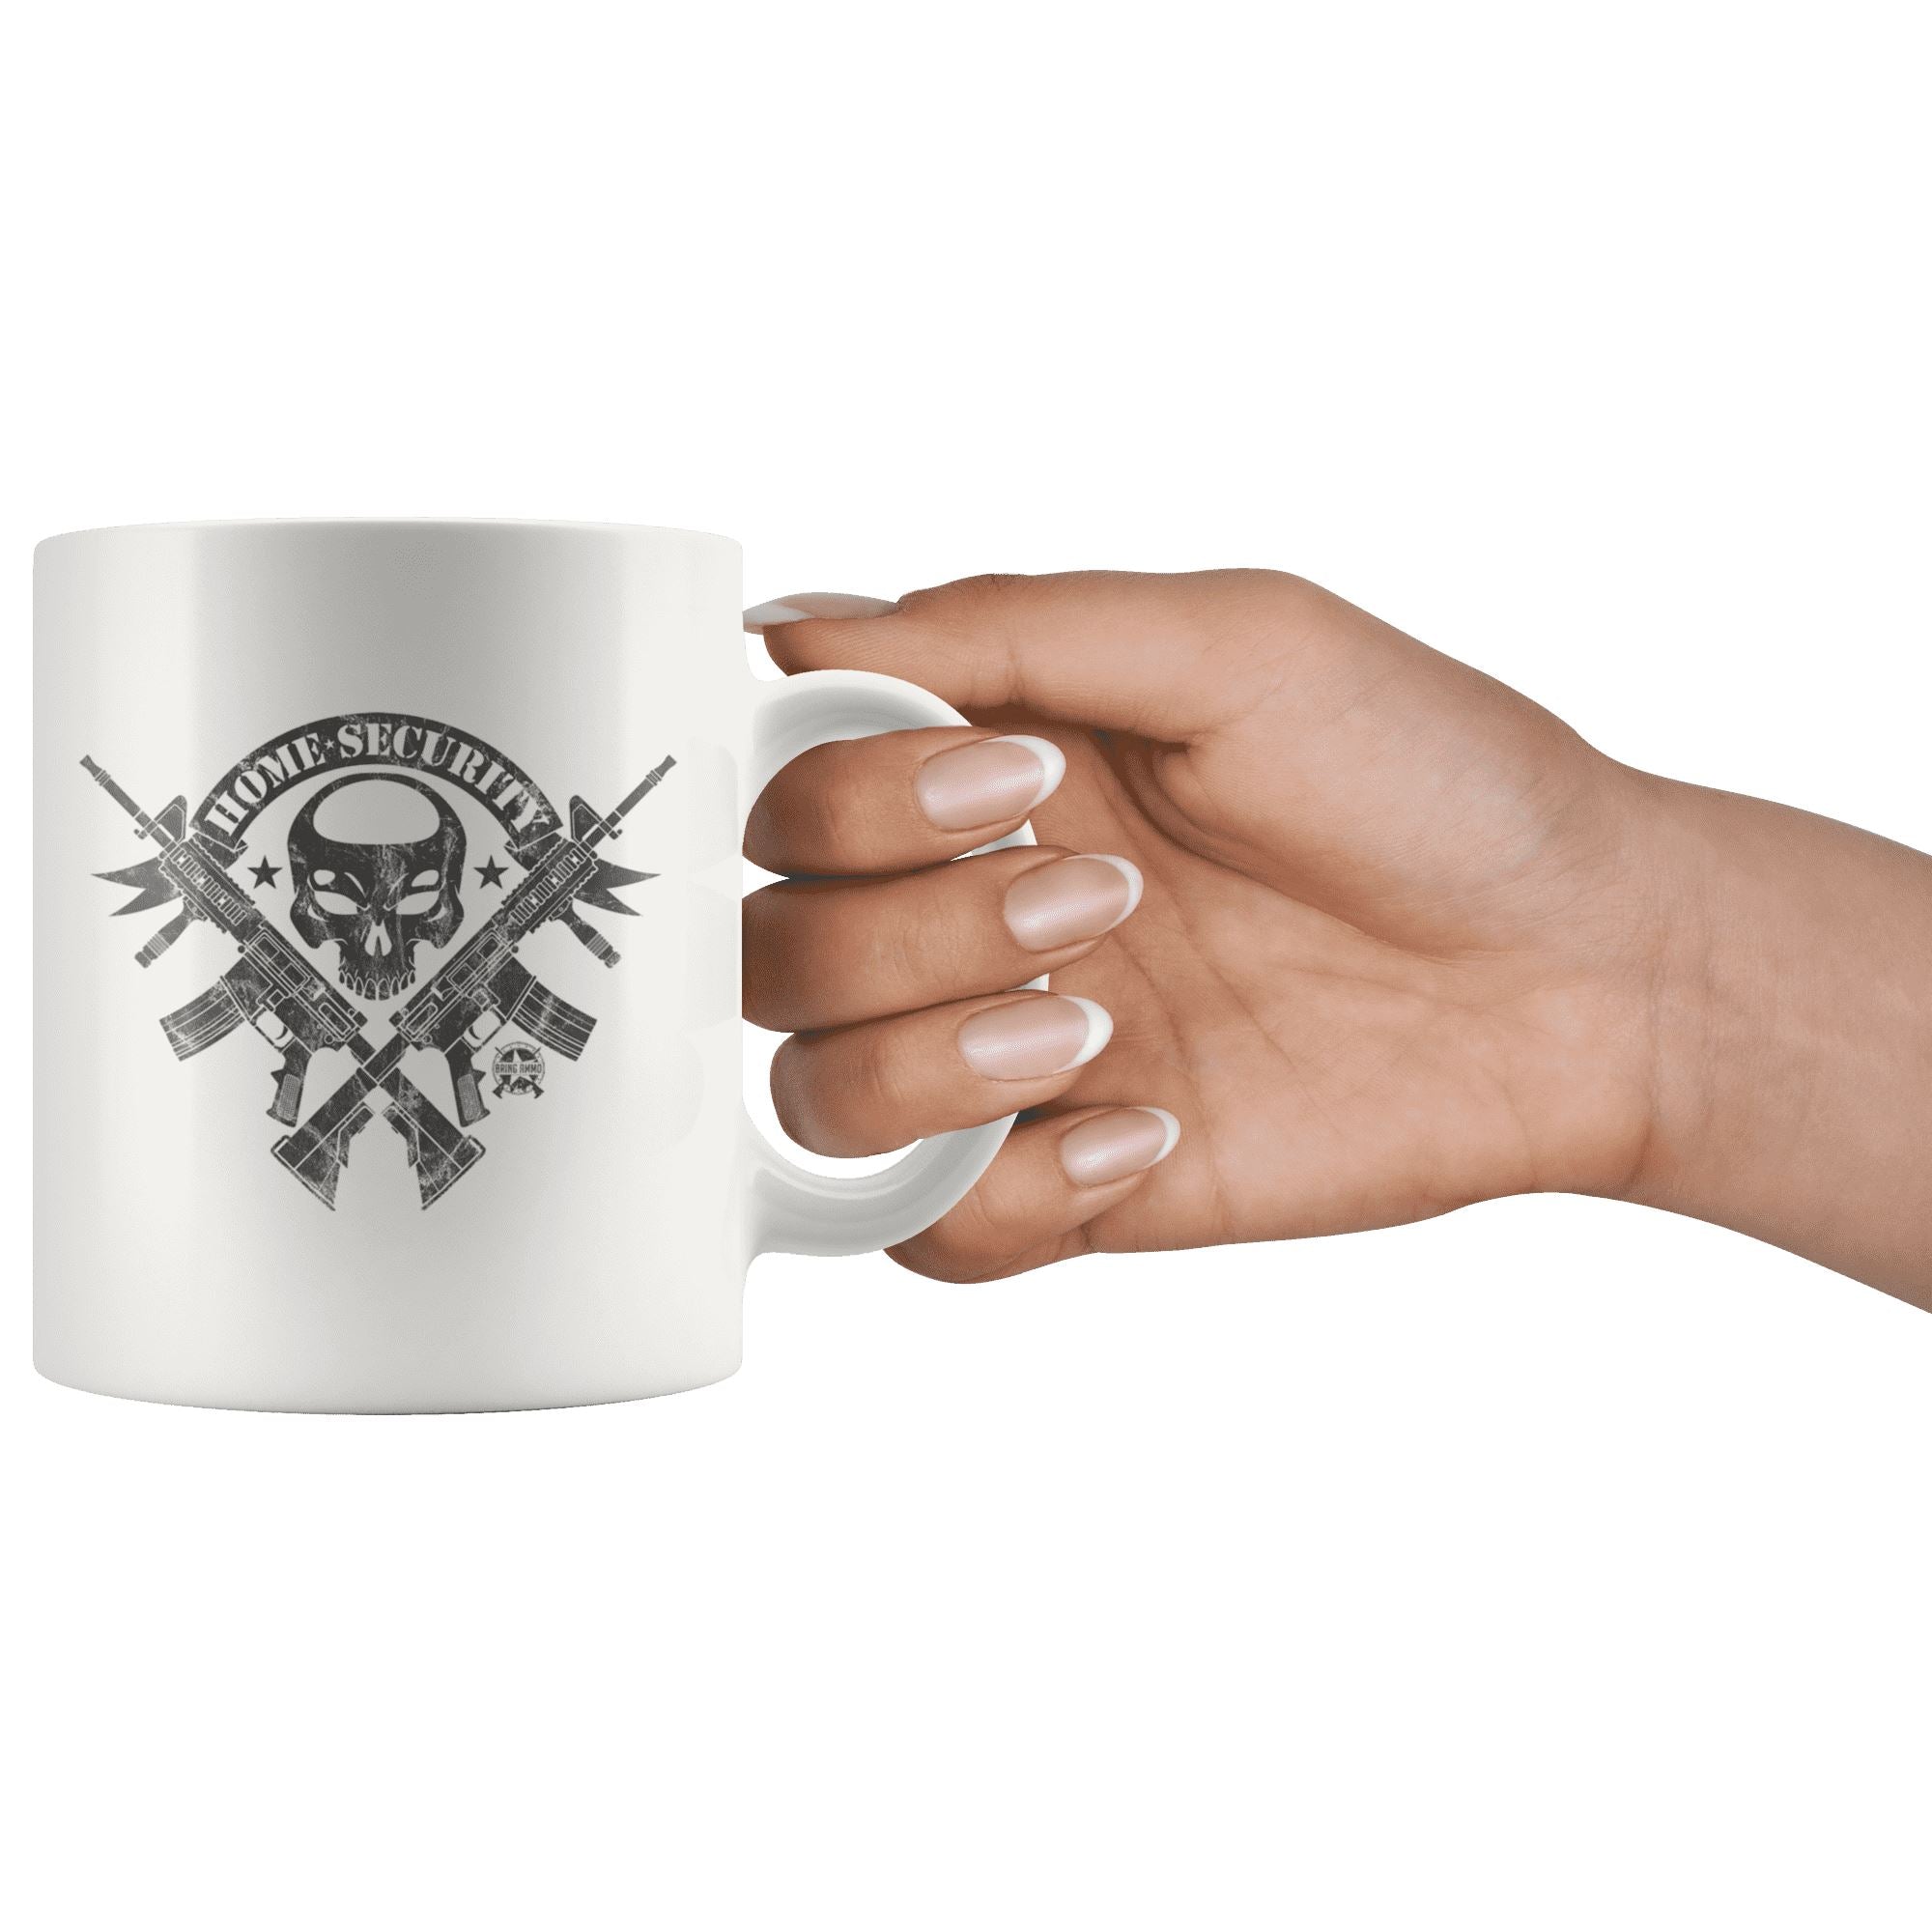 Home Security - Coffee Mug Drinkware 